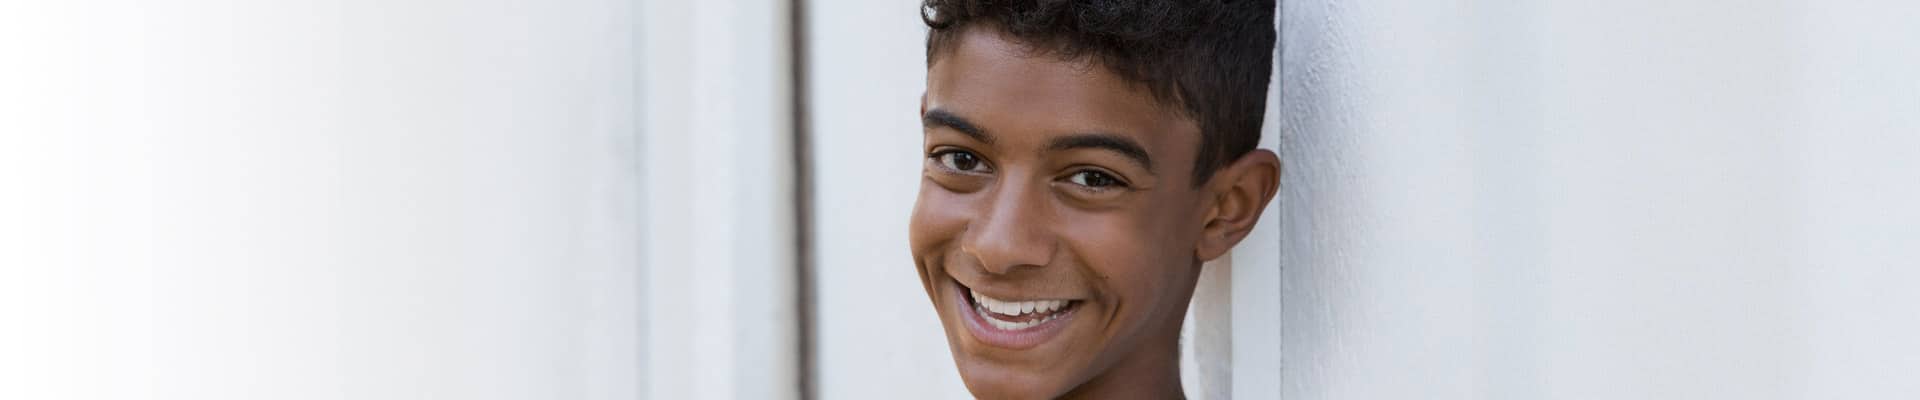 Teenager Smiling at iSmile Orthodontics Seattle WA